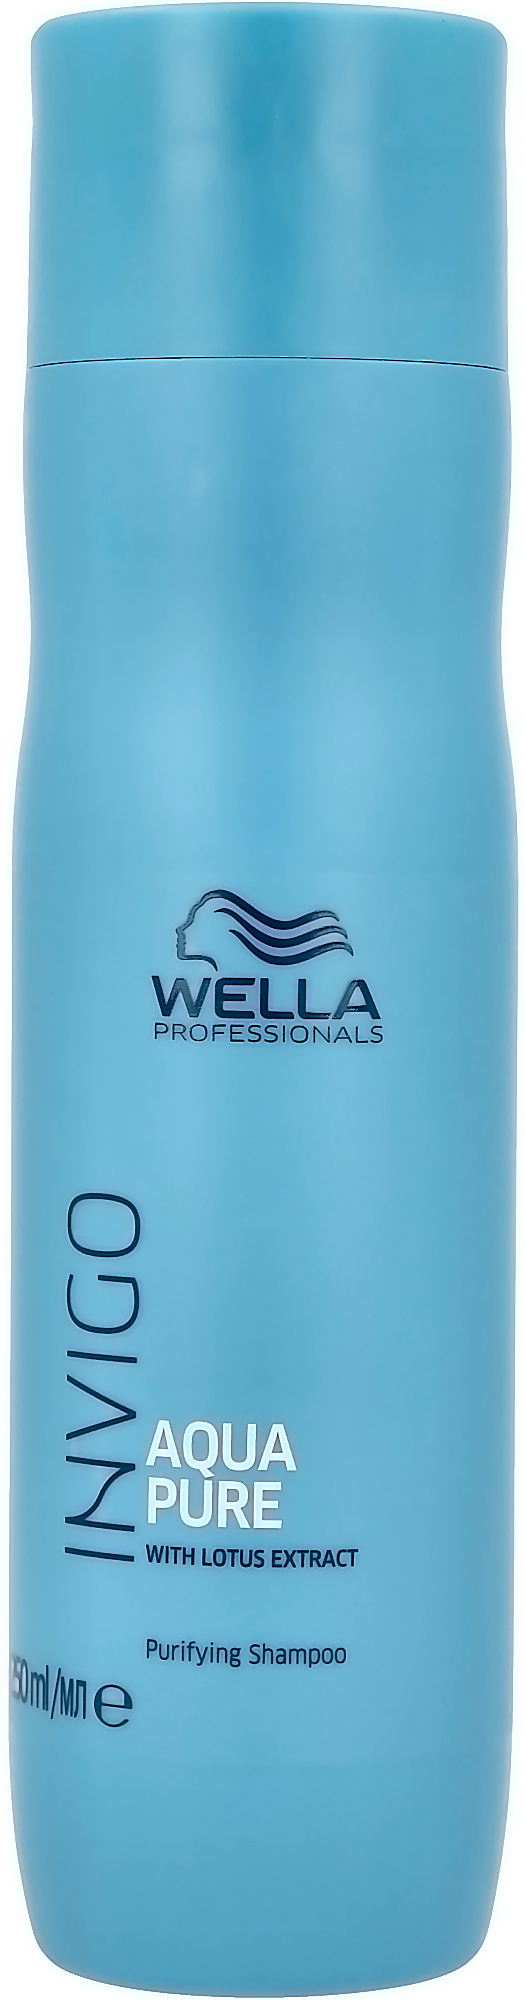 Wella Professional - Invigo Aqua Pure (Puryfying Shampoo) - 250ml